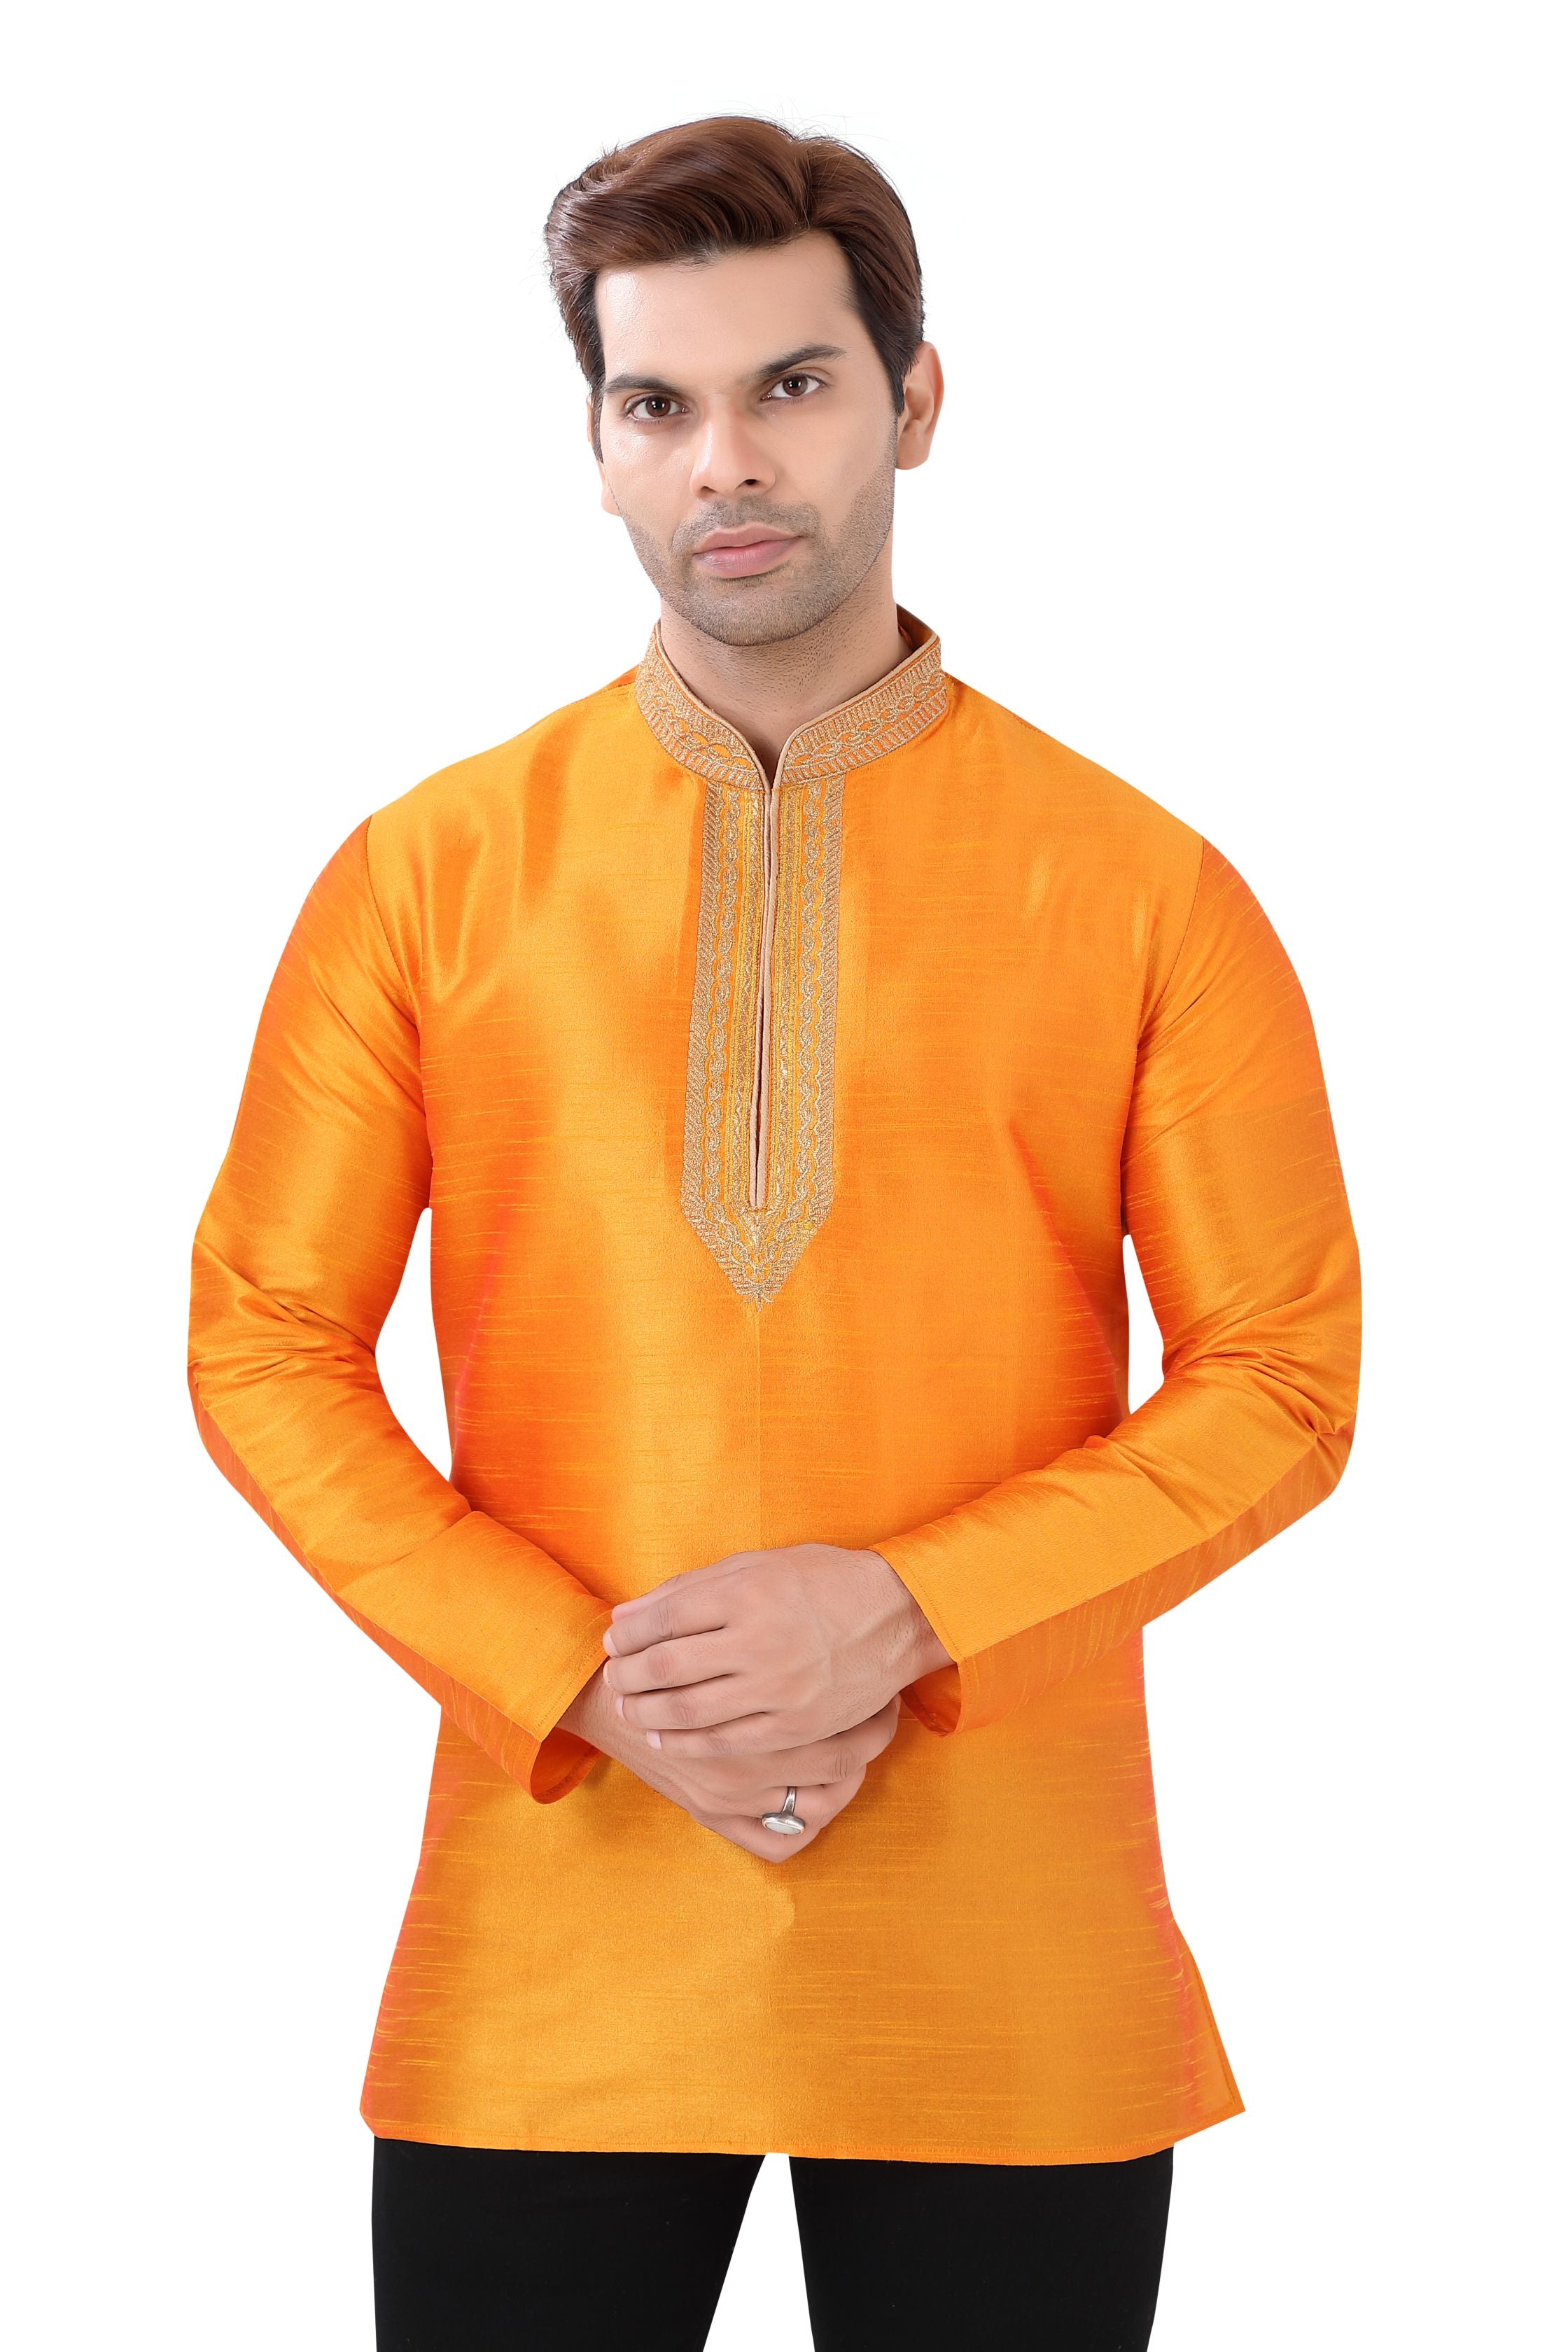 Banarasi Dupion Silk Short Kurta with embroidery in Orange Color - Premium kurta pajama from Dapper Ethnic - Just $49! Shop now at Dulhan Exclusives